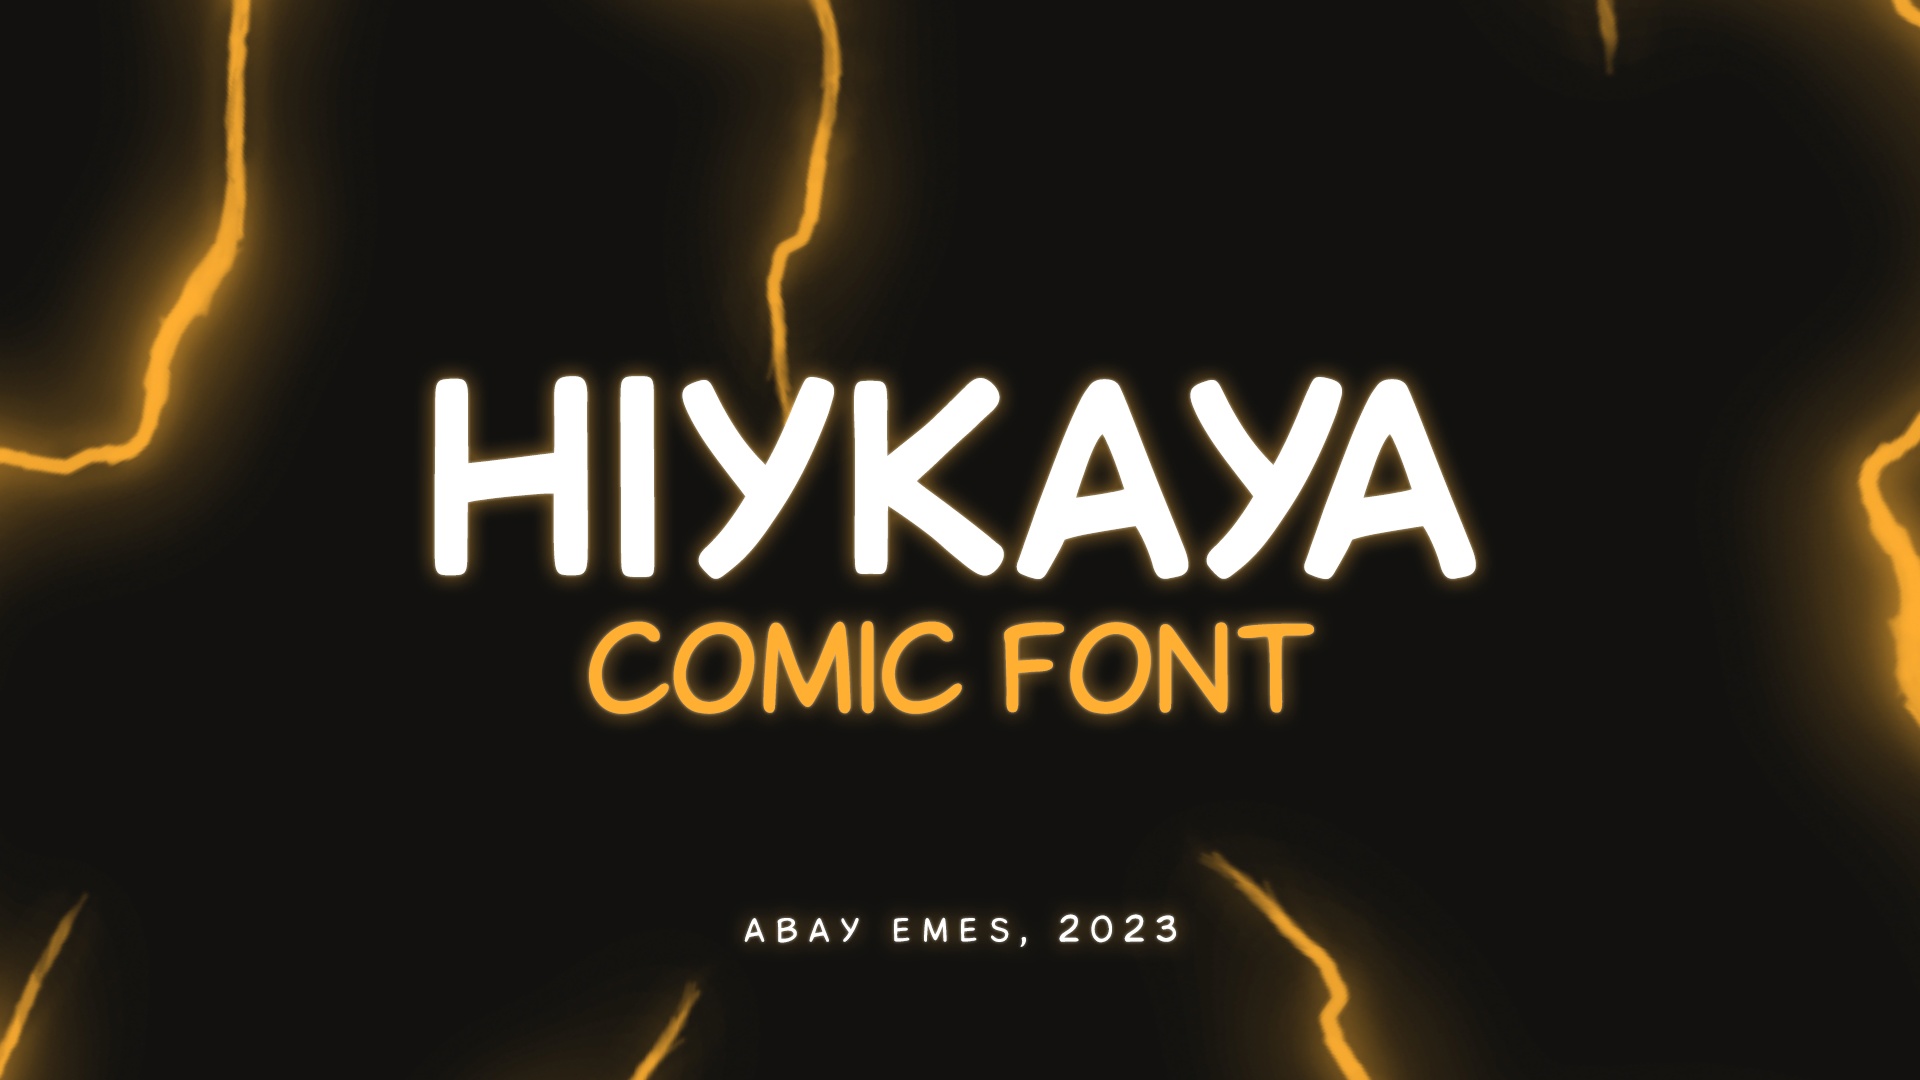 Hiykaya